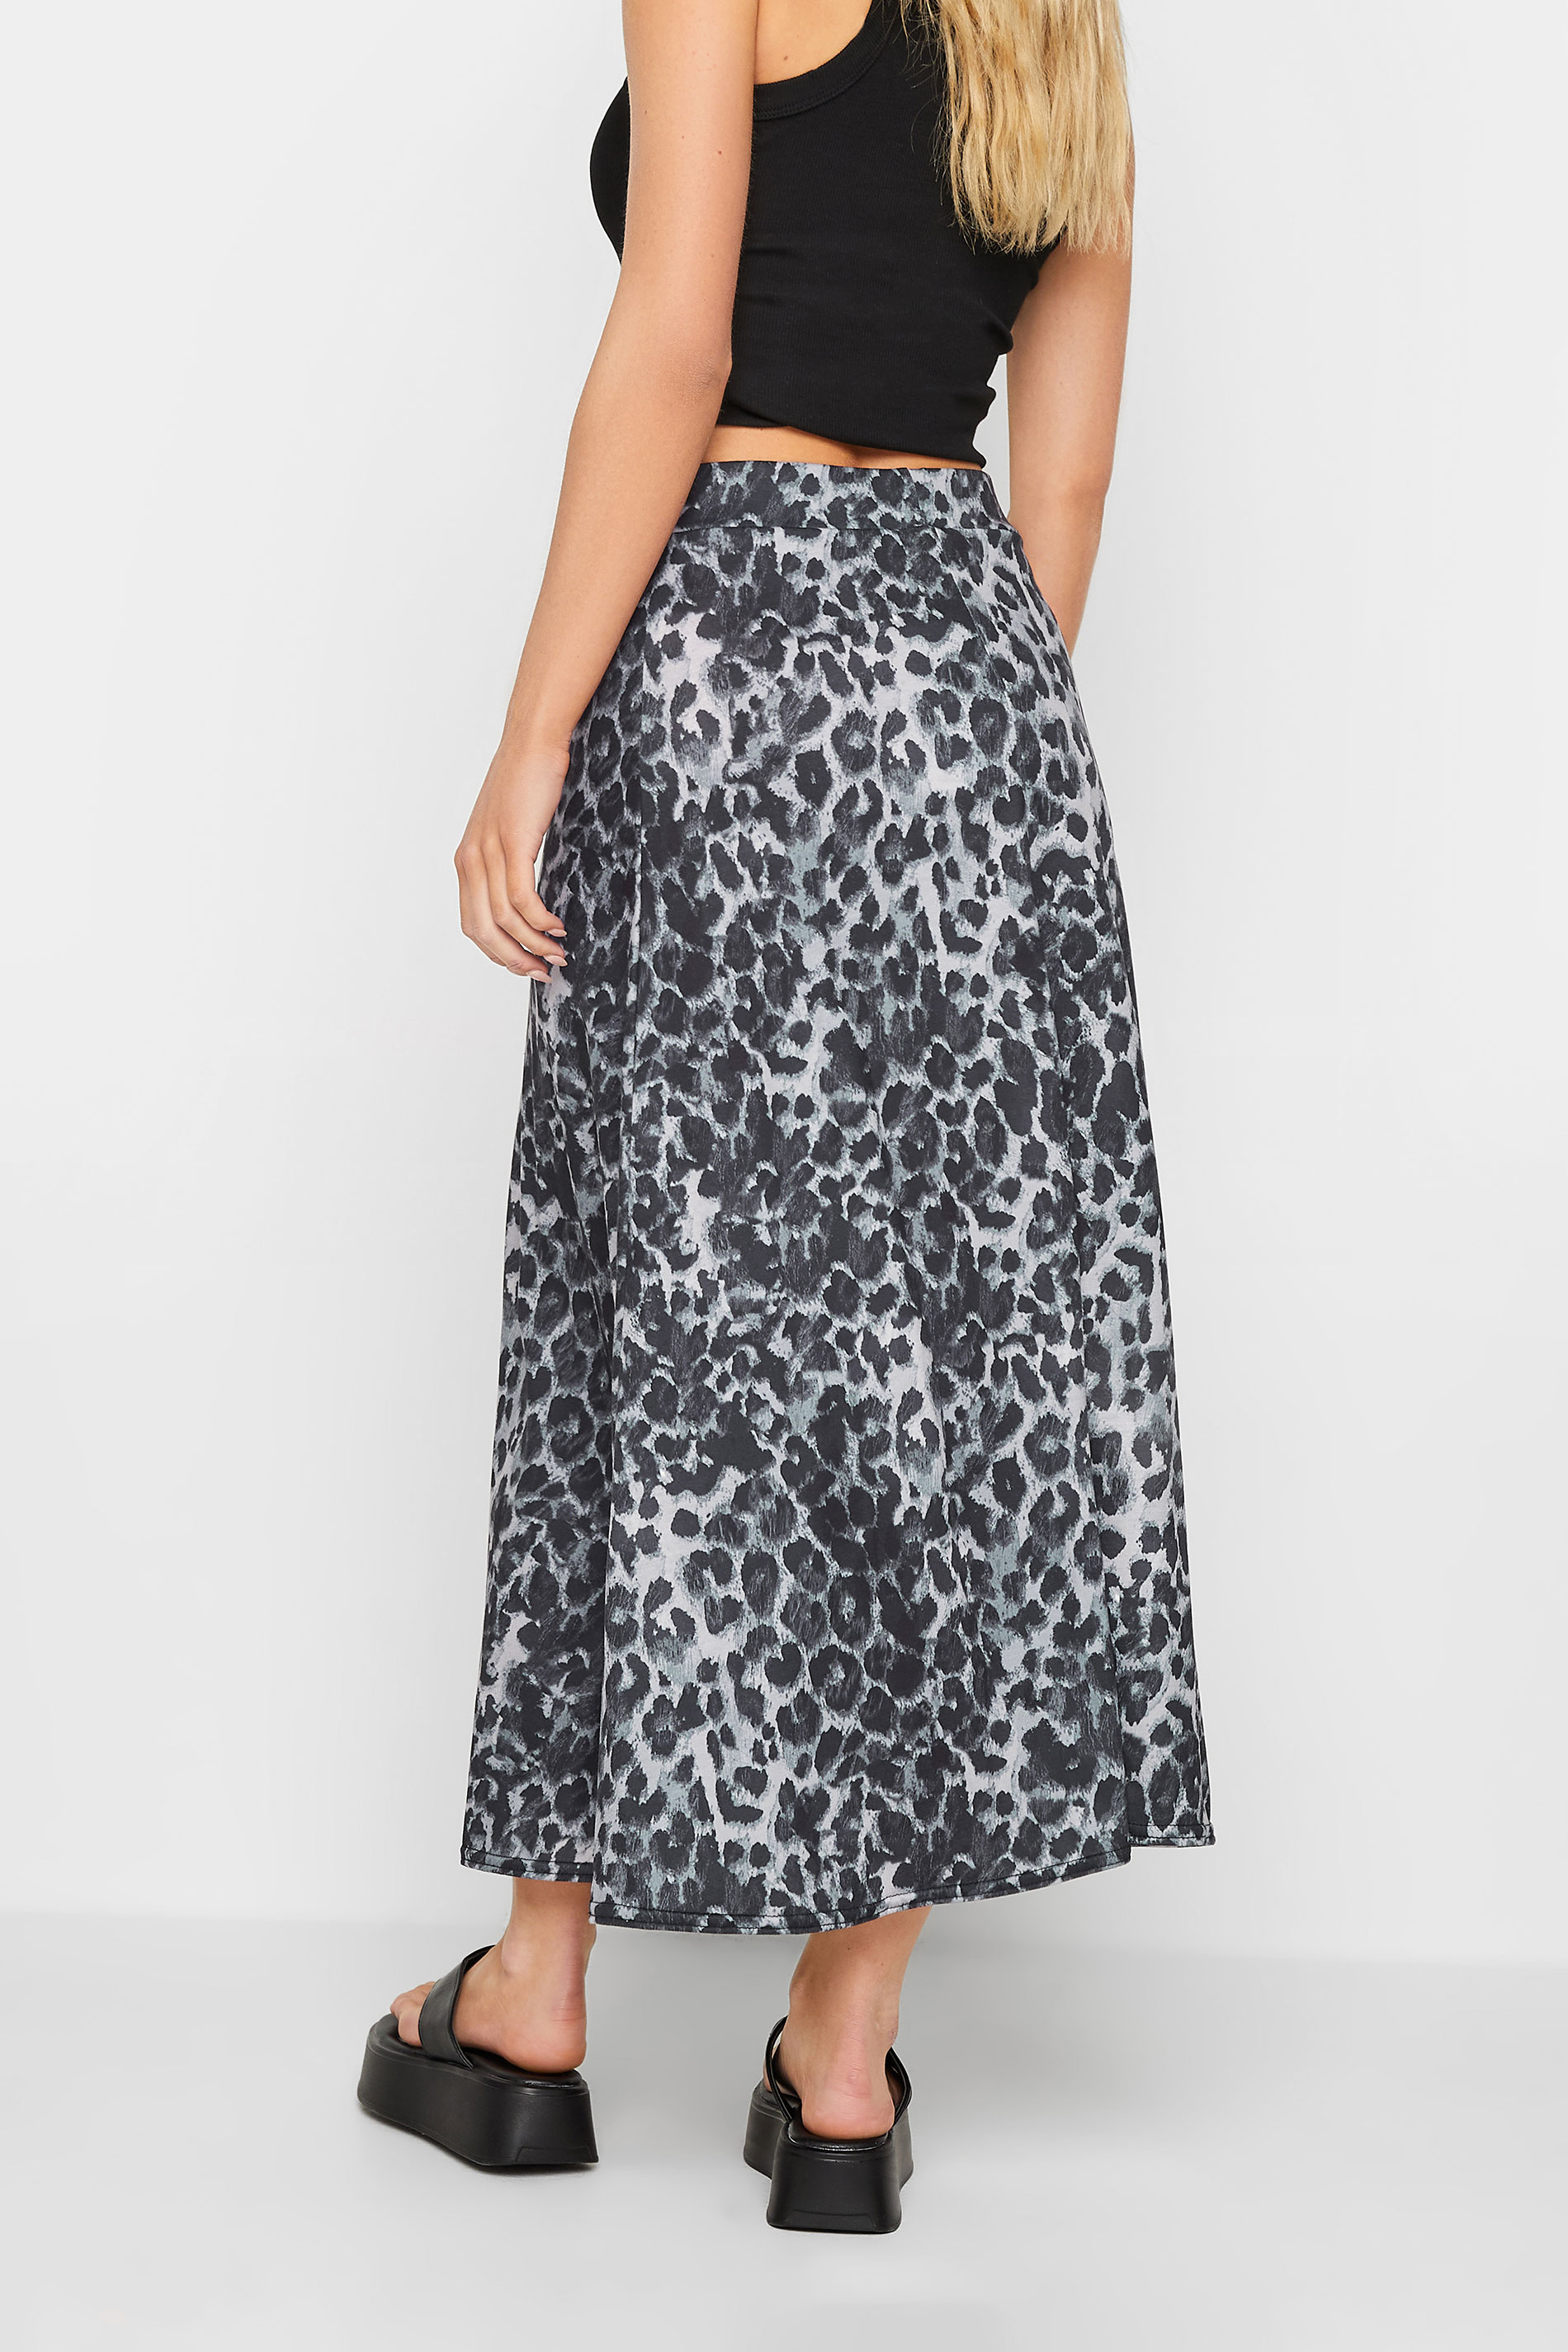 PixieGirl Grey Leopard Print Maxi Skirt | PixieGirl 3